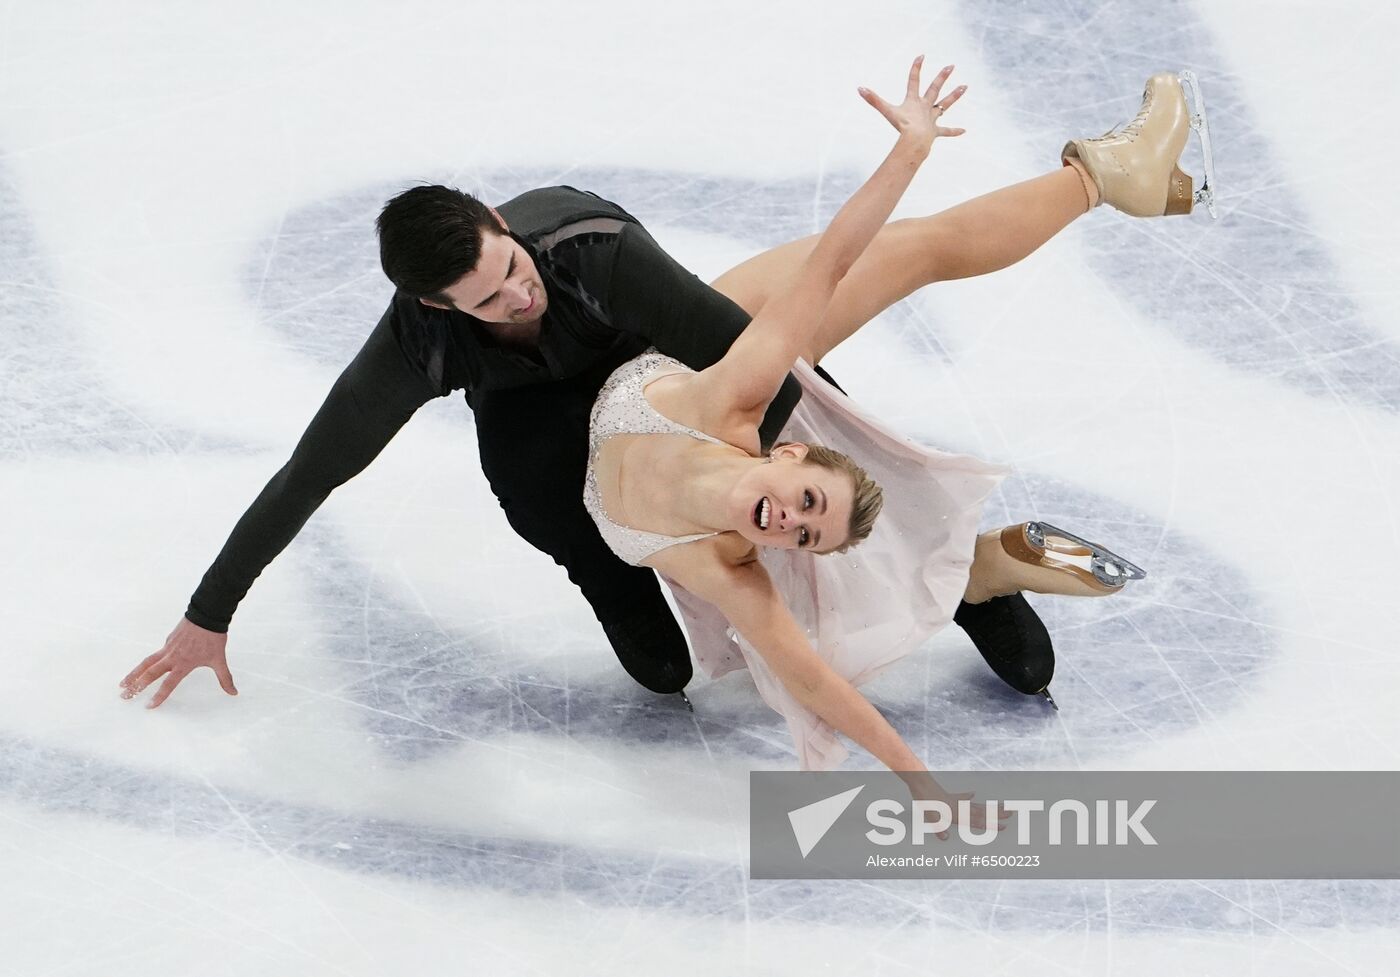 Sweden Figure Skating Worlds Ice Dance